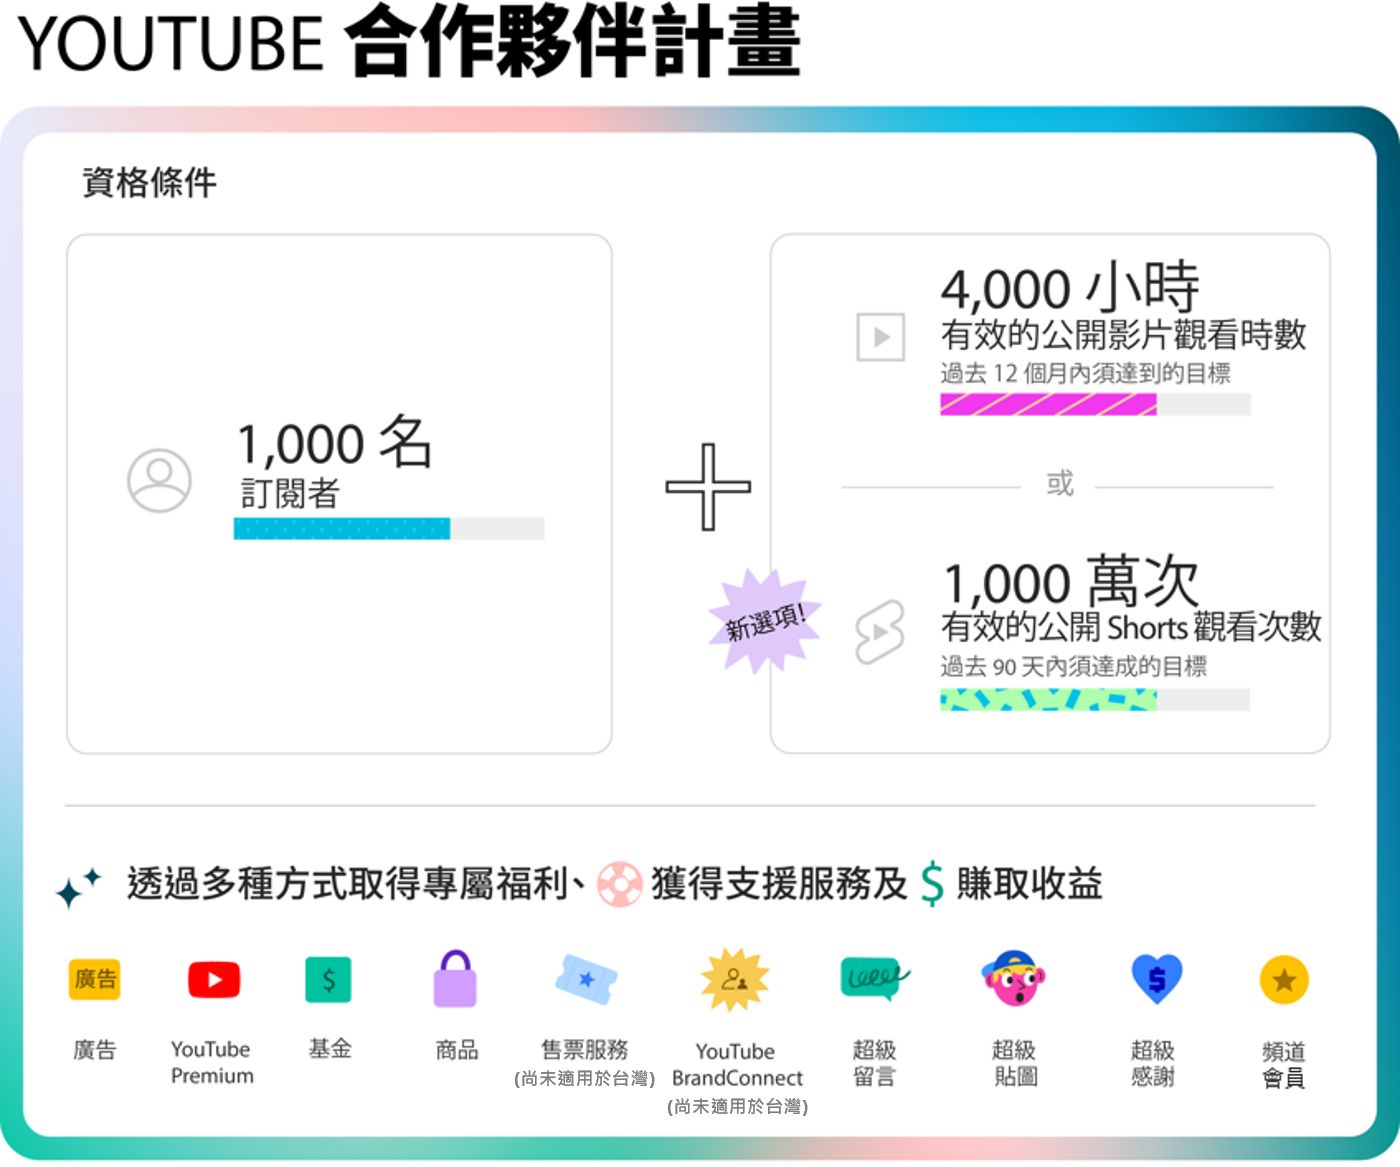 Shorts影片可獲廣告分潤！YouTube將推新營利功能　降低門檻助創作者賺錢｜財經 - 台北郵報 | The Taipei Post